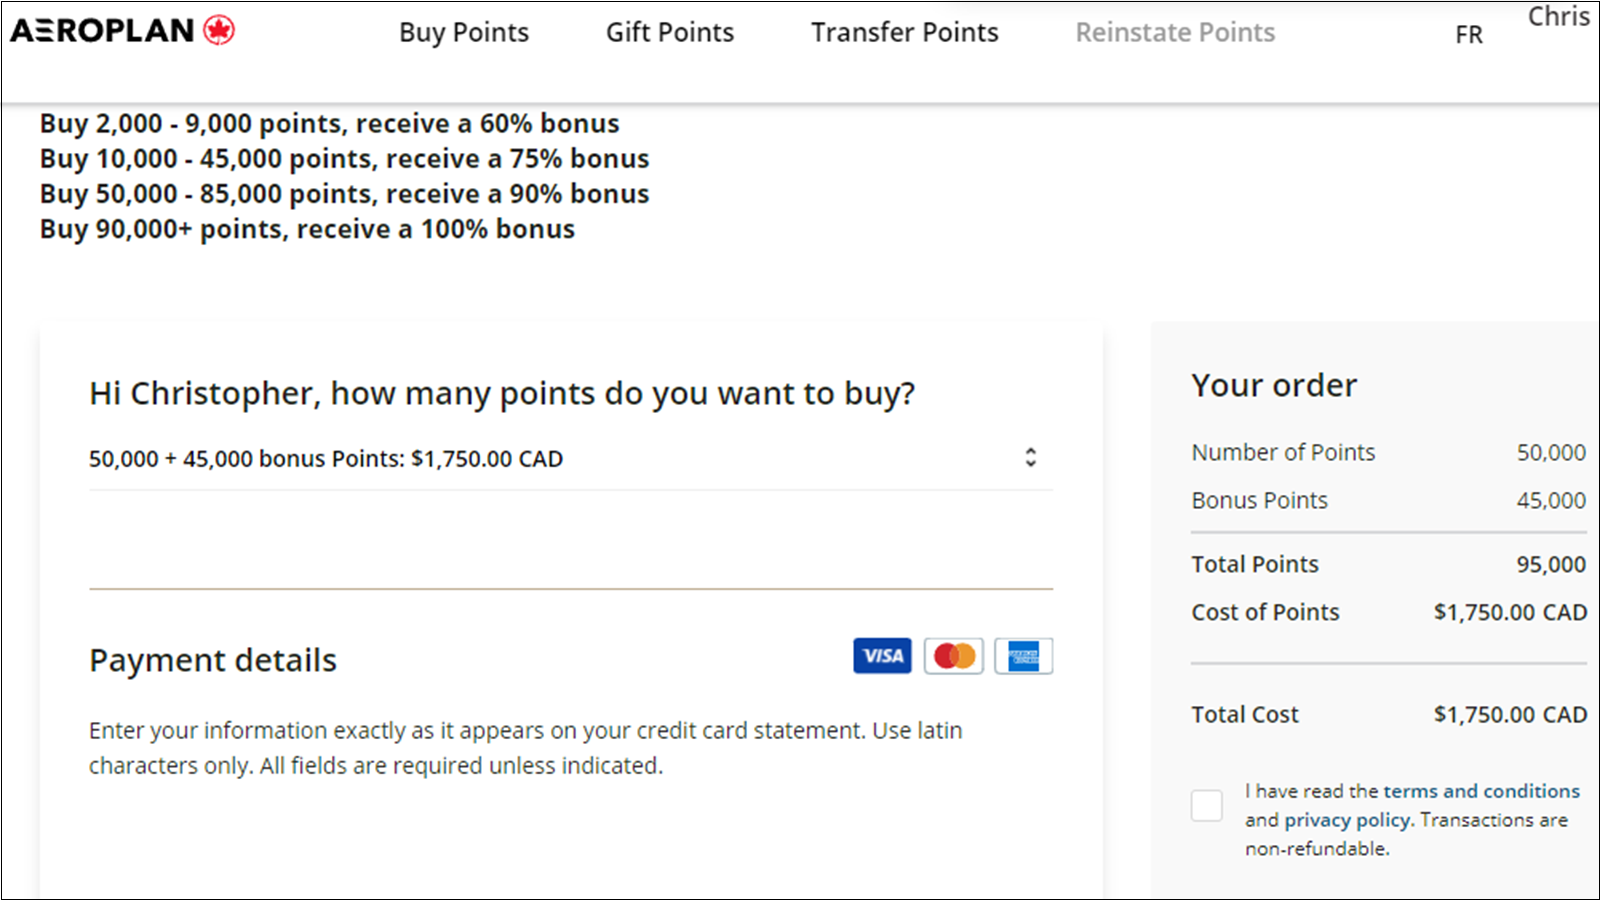 Buy Aeroplan Points with a bonus